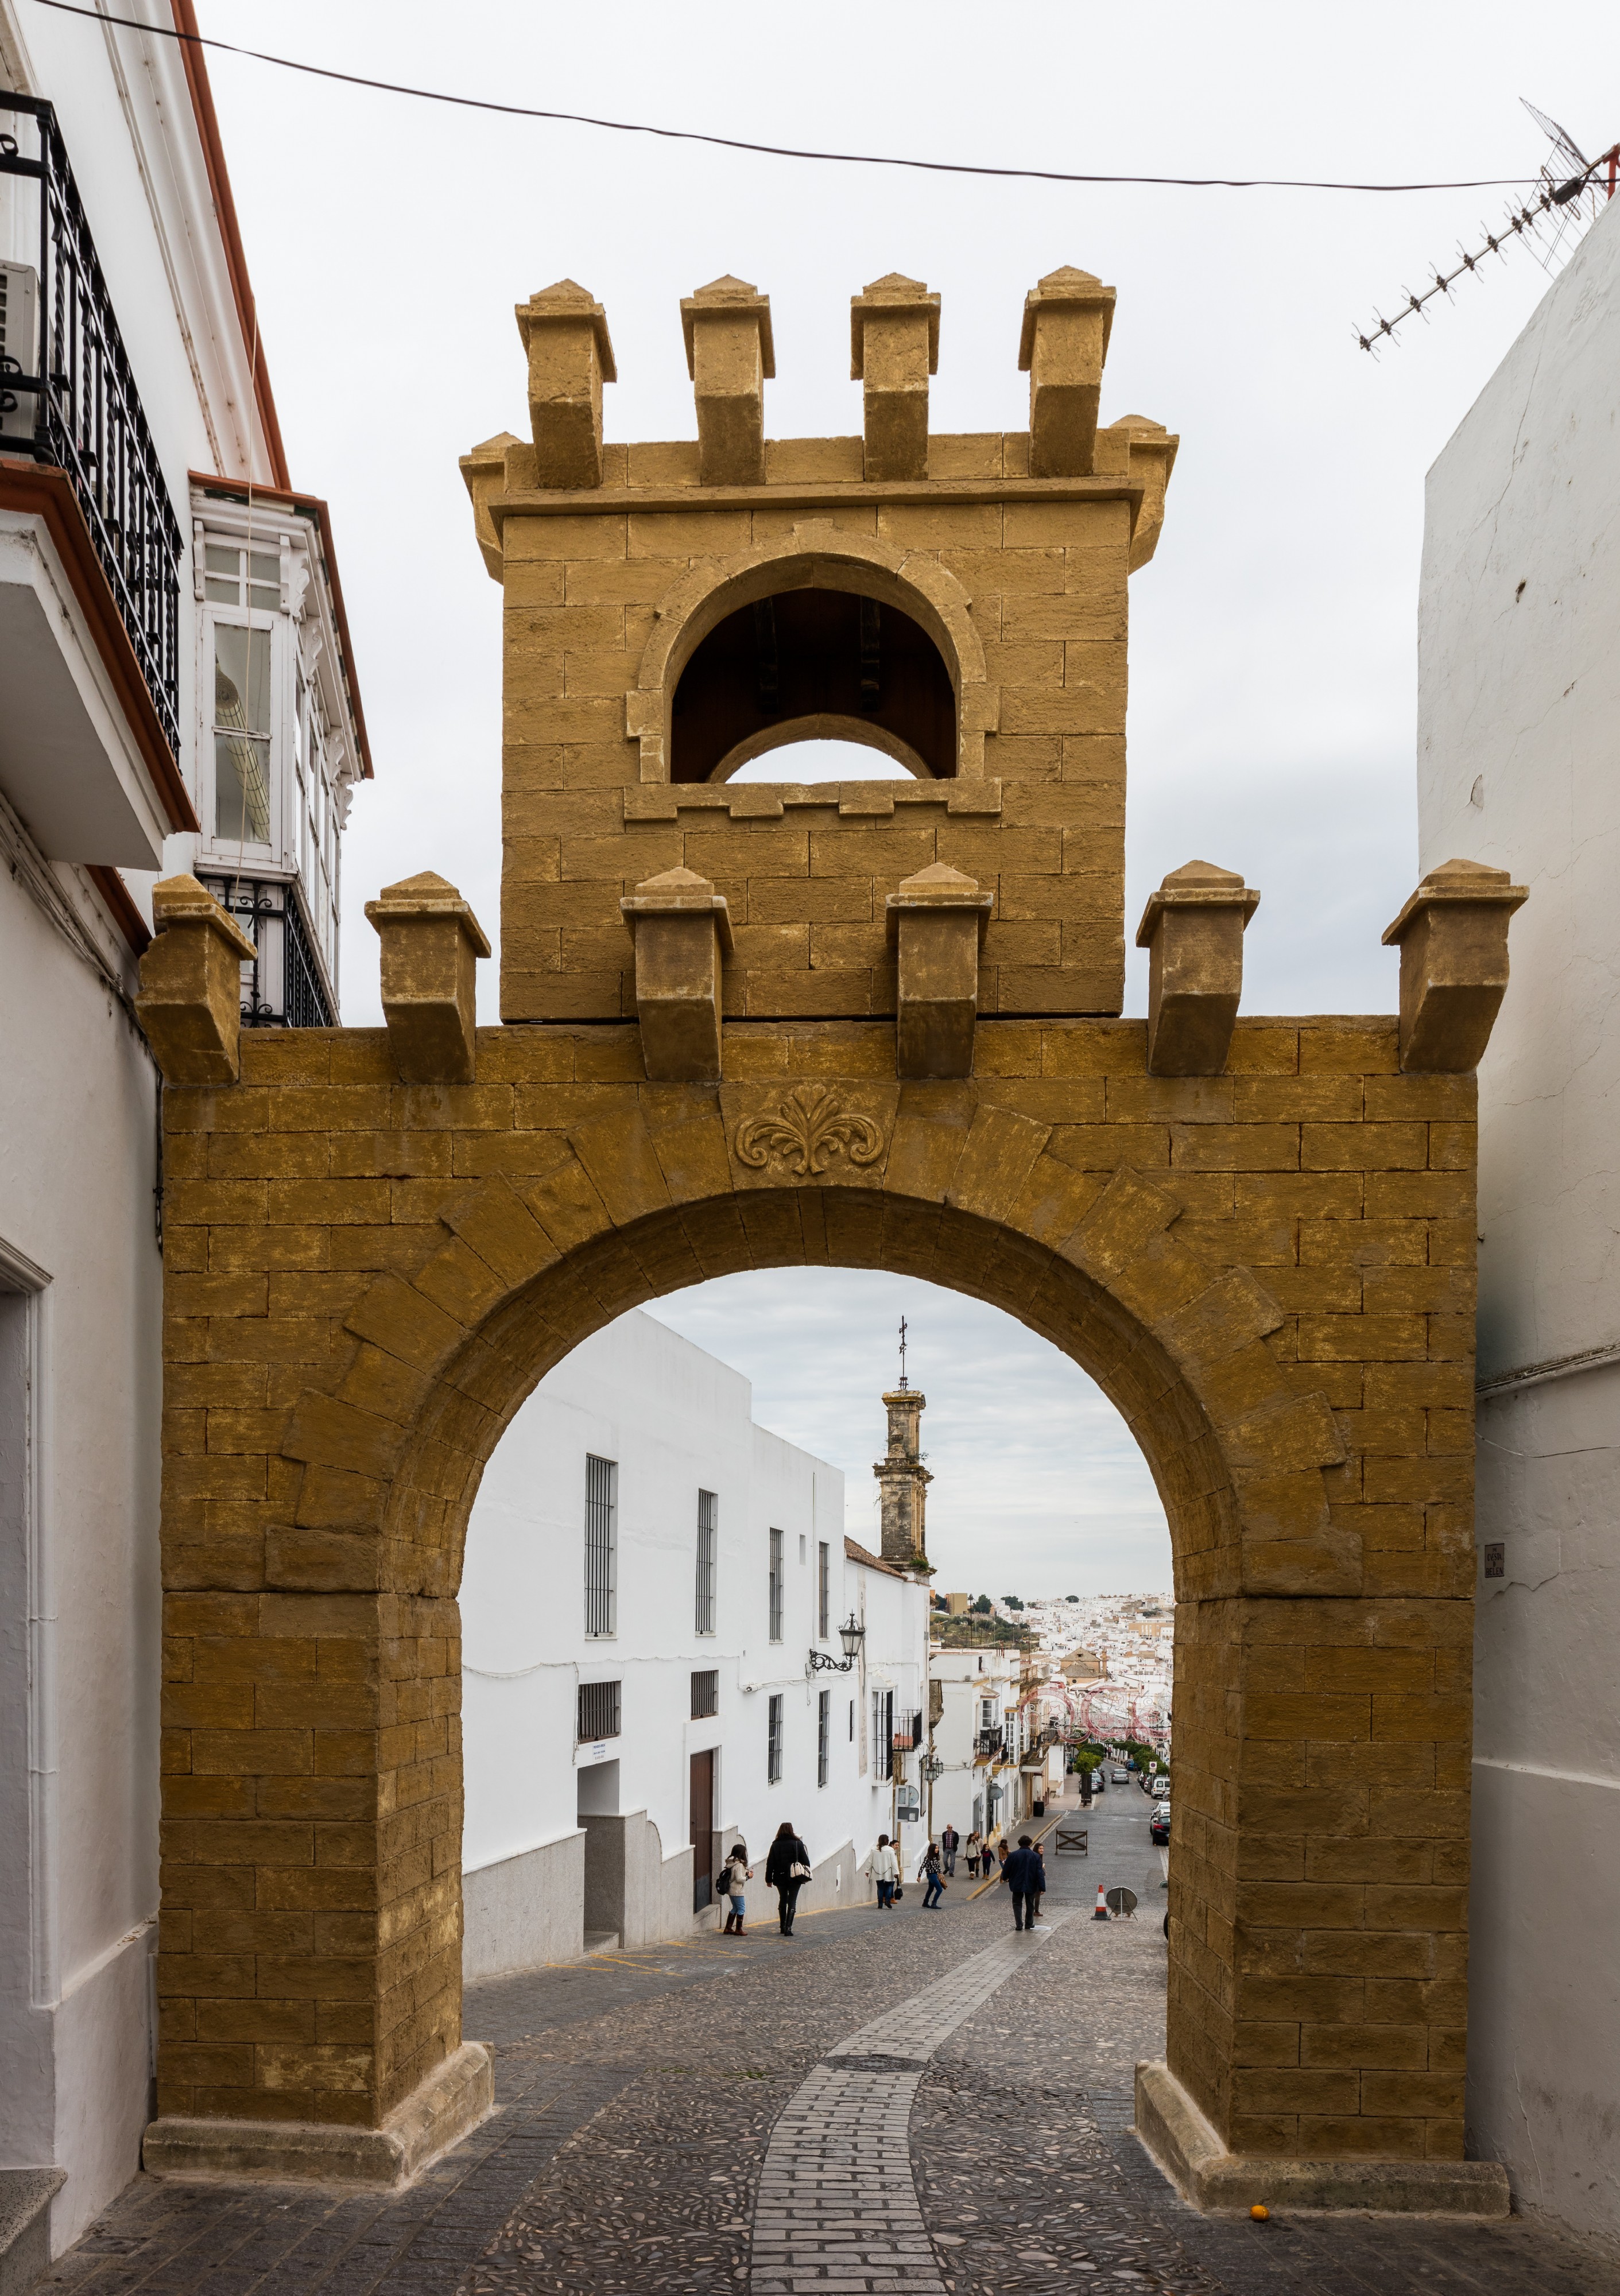 Puerta de Jerez, Arcos de la Frontera, Cádiz, España, 2015-12-08, DD 17